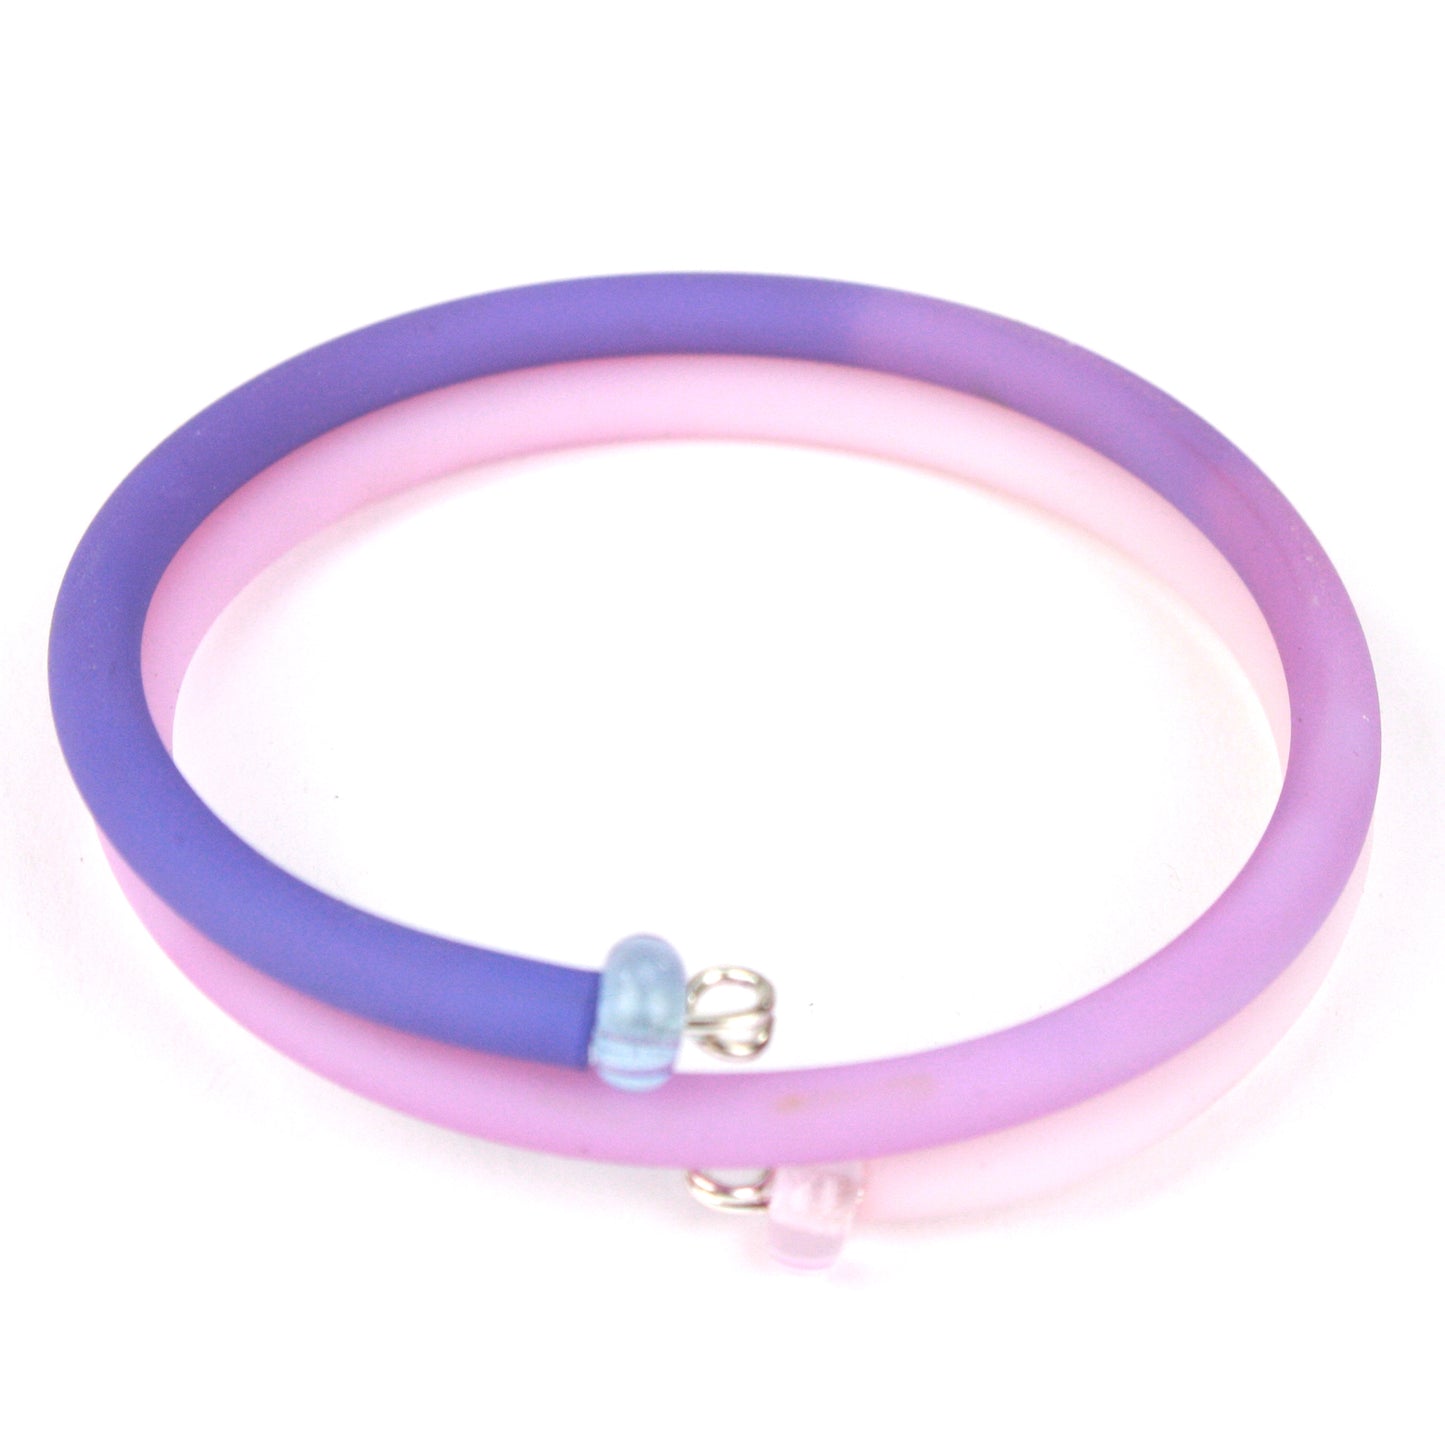 Double wrap bracelet - Purple and pink